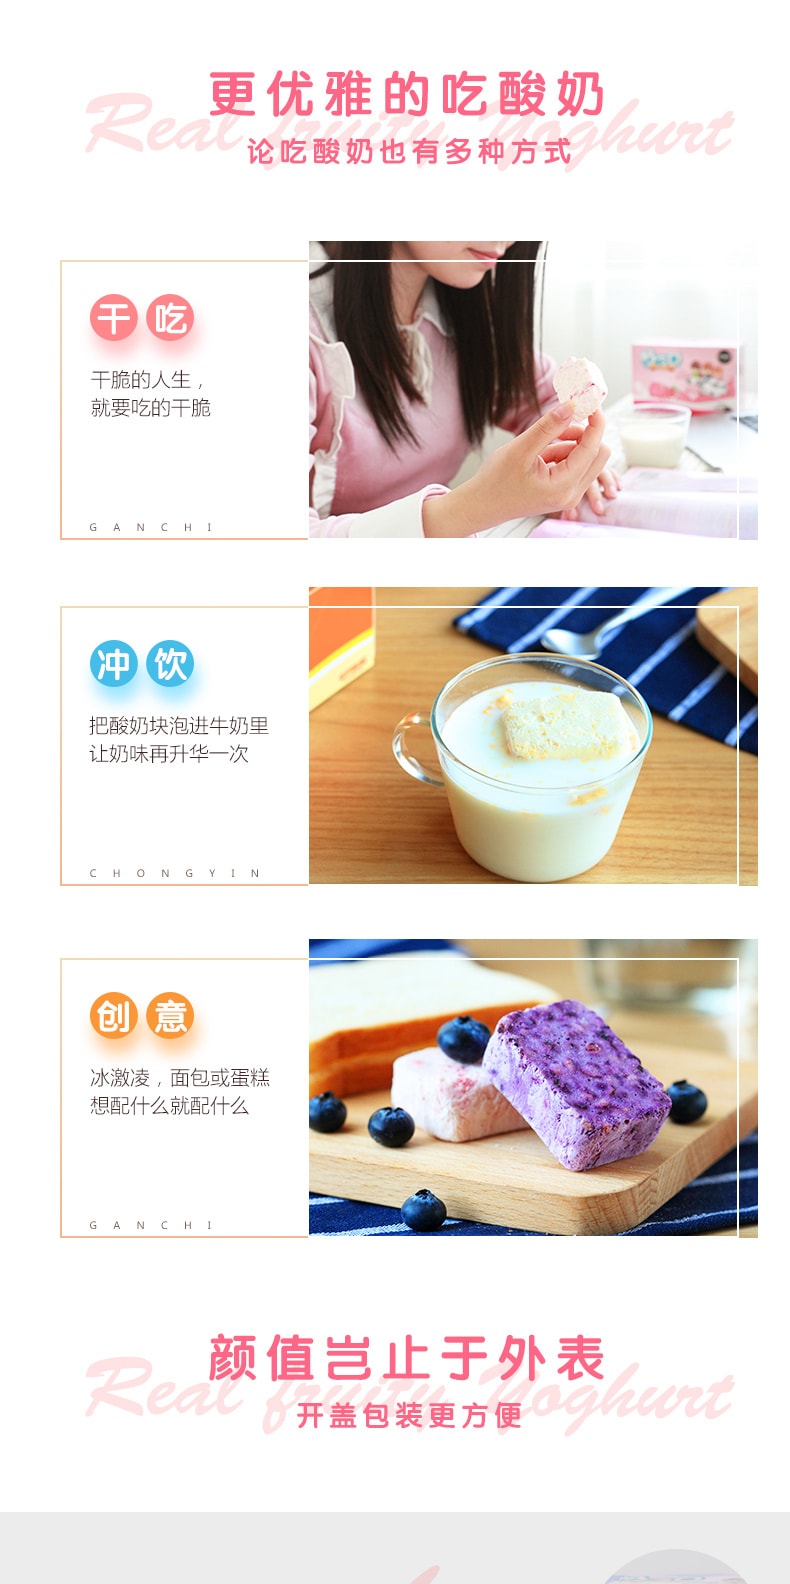 [China Direct Mail] Three squirrel yogurt cubes strawberry freeze-dried yogurt cubes 54g